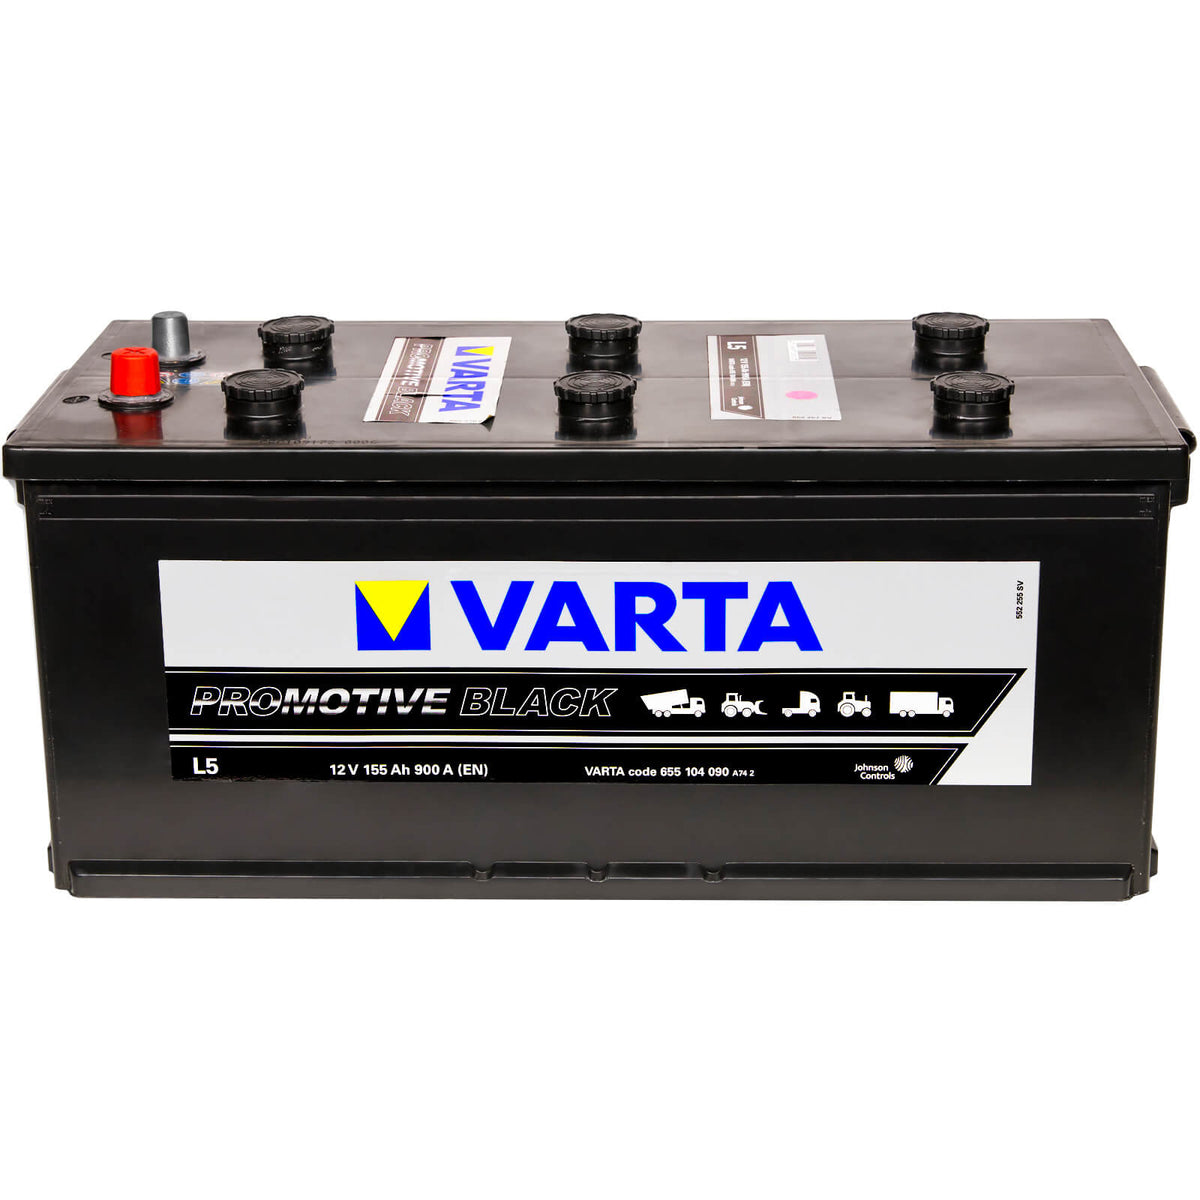 Varta L5 Promotive Black 12V 155Ah 900A/EN